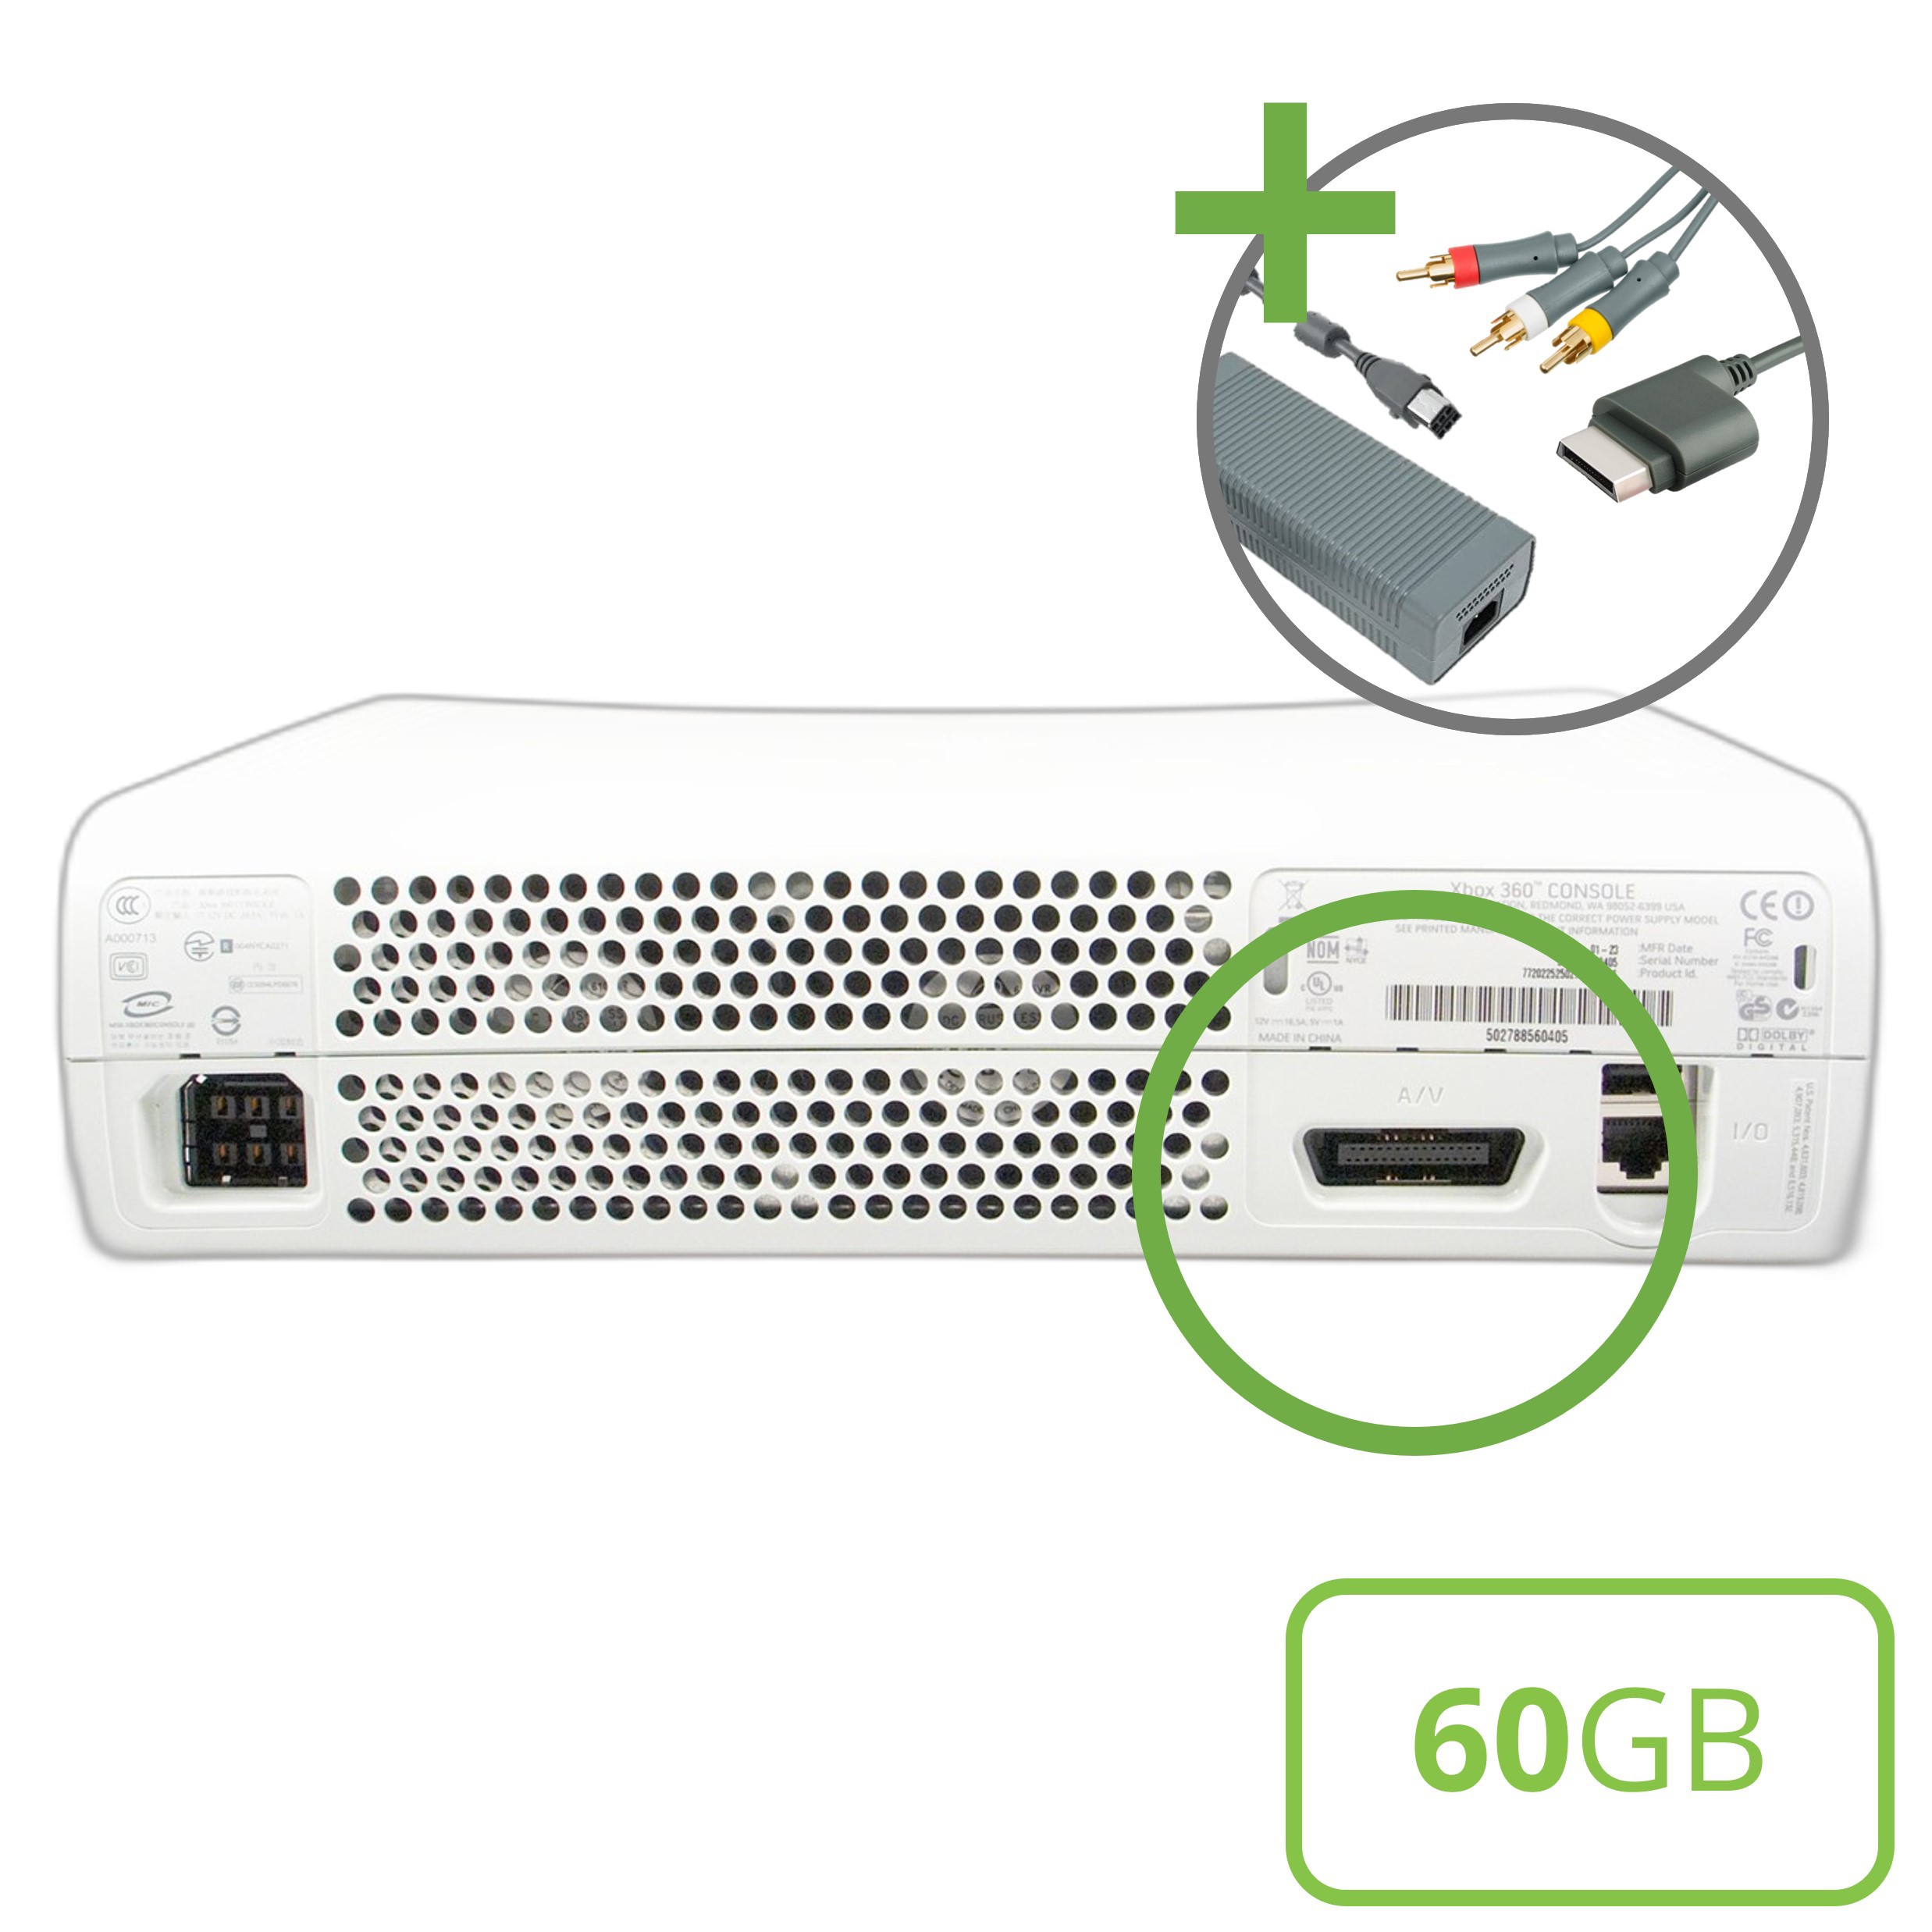 Microsoft Xbox 360 Premium Console (AV) - 60GB - Xbox 360 Hardware - 4